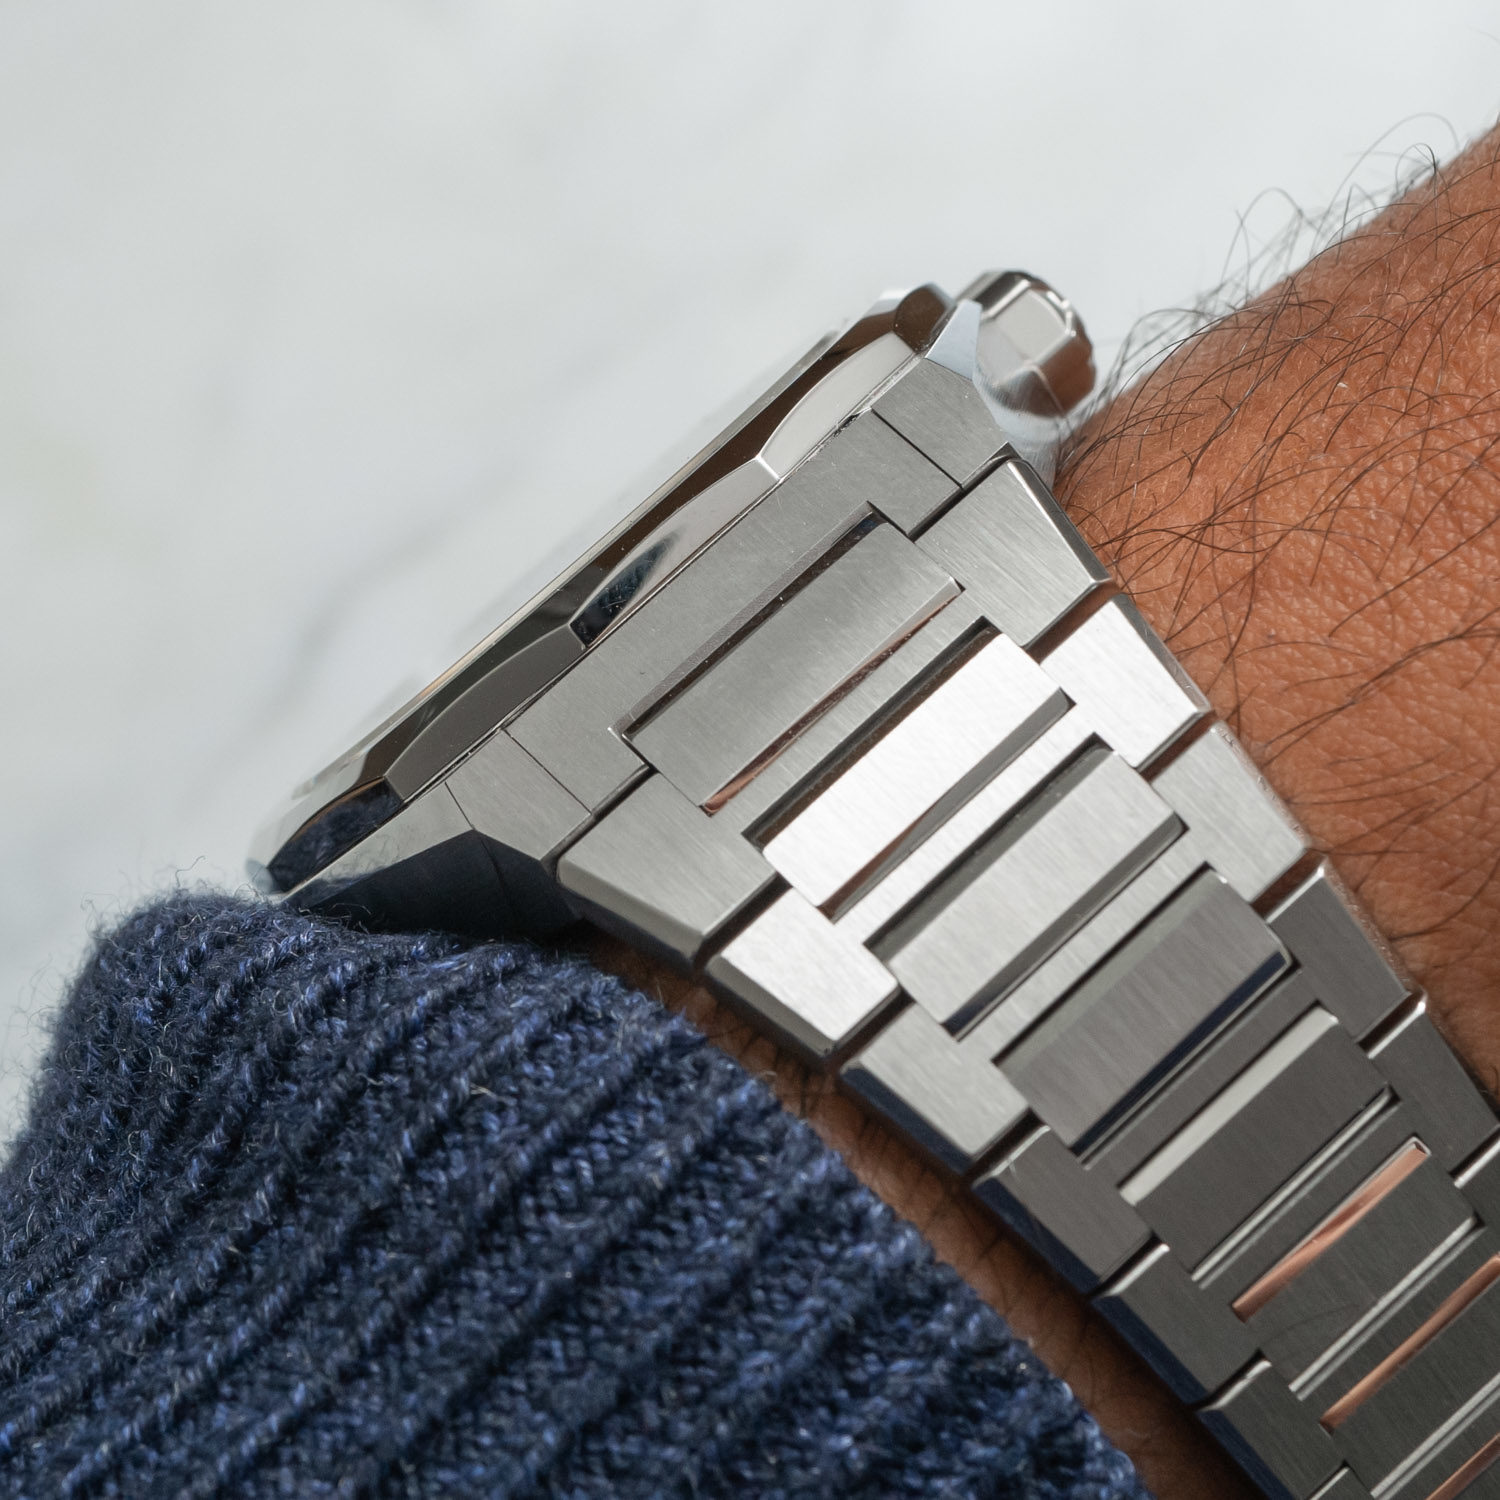 Hands on 36mm & 41mm Zenith Defy Skyline El Primero - Skeleton Integrated  bracelet watches 